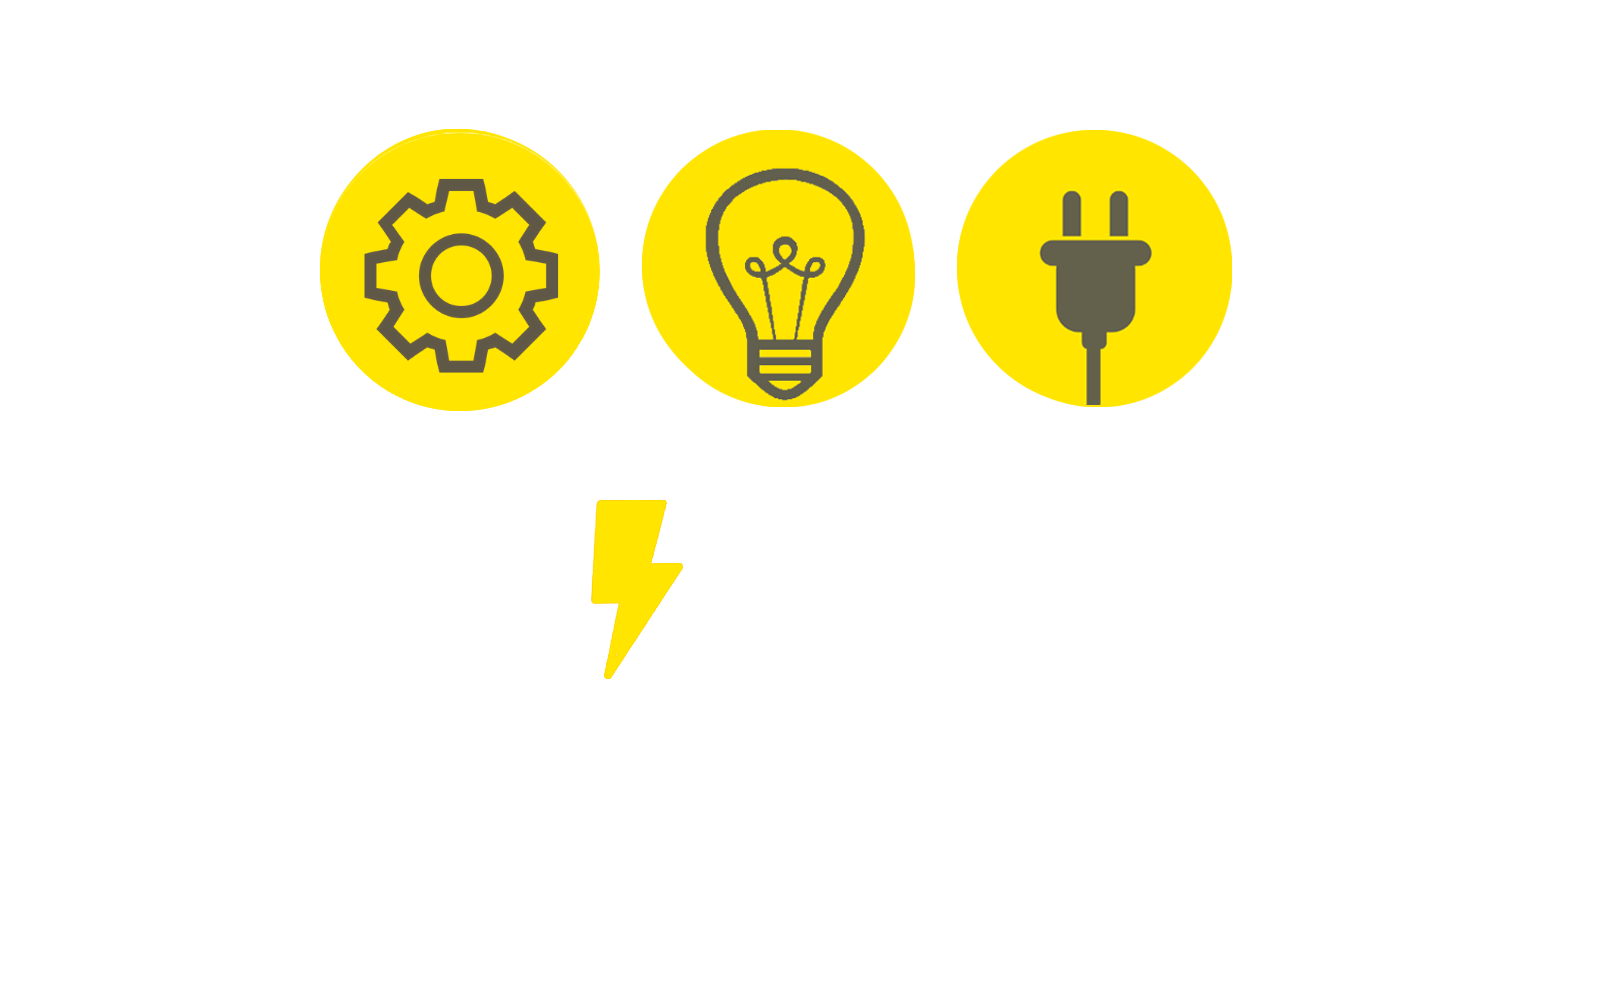 Vanacker Technics